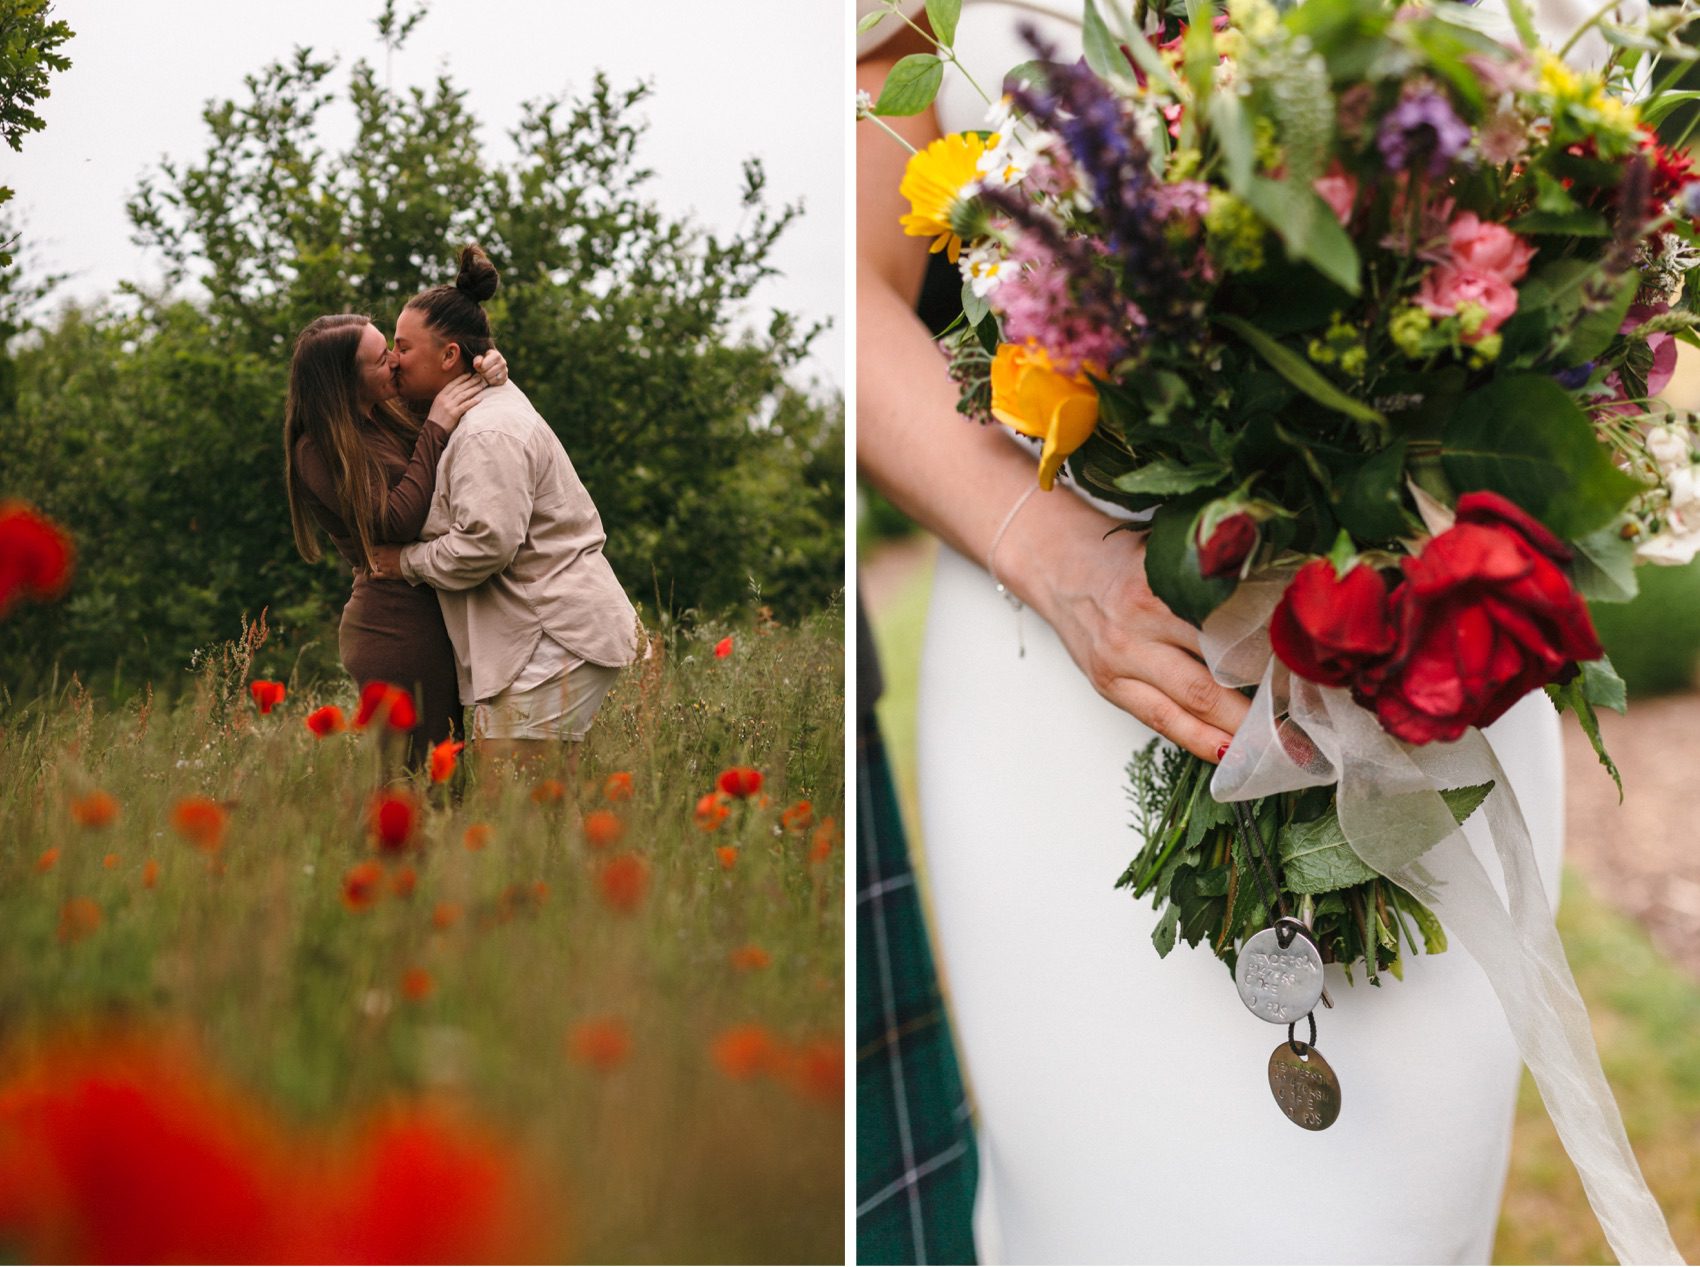 Colourful wedding photography in Devon & Cornwall